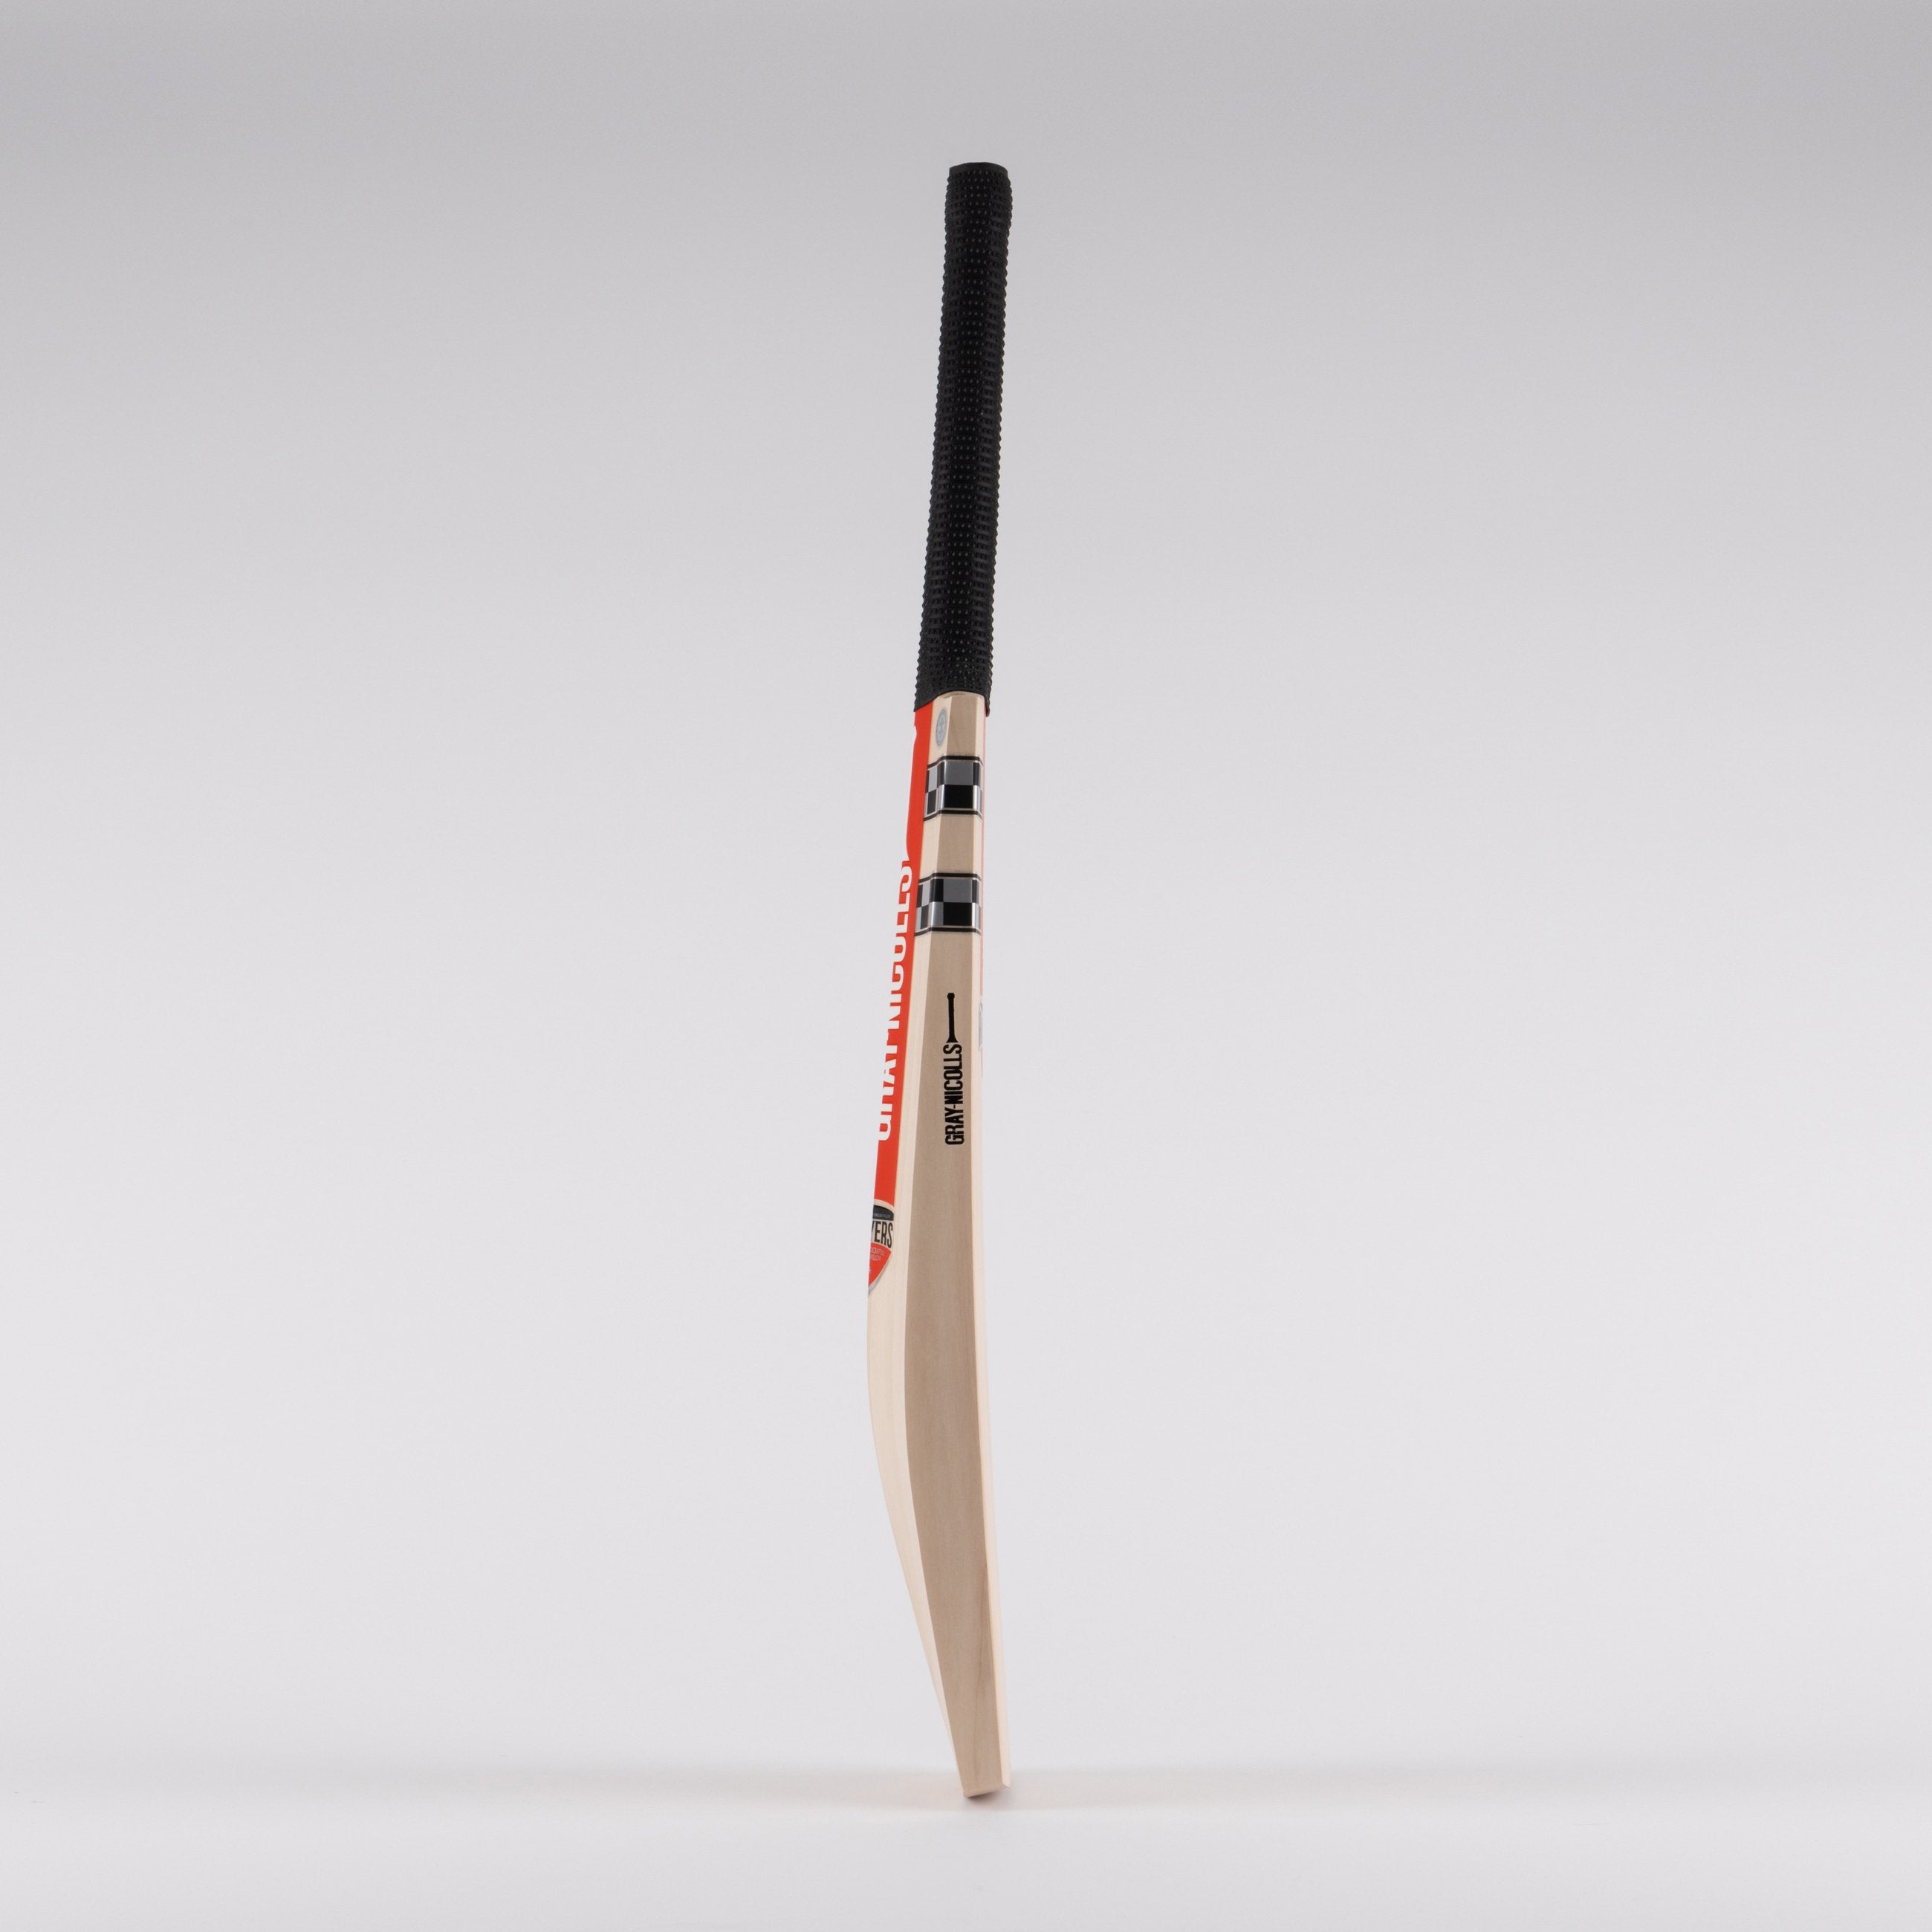 Classic Players Adult Cricket Bat